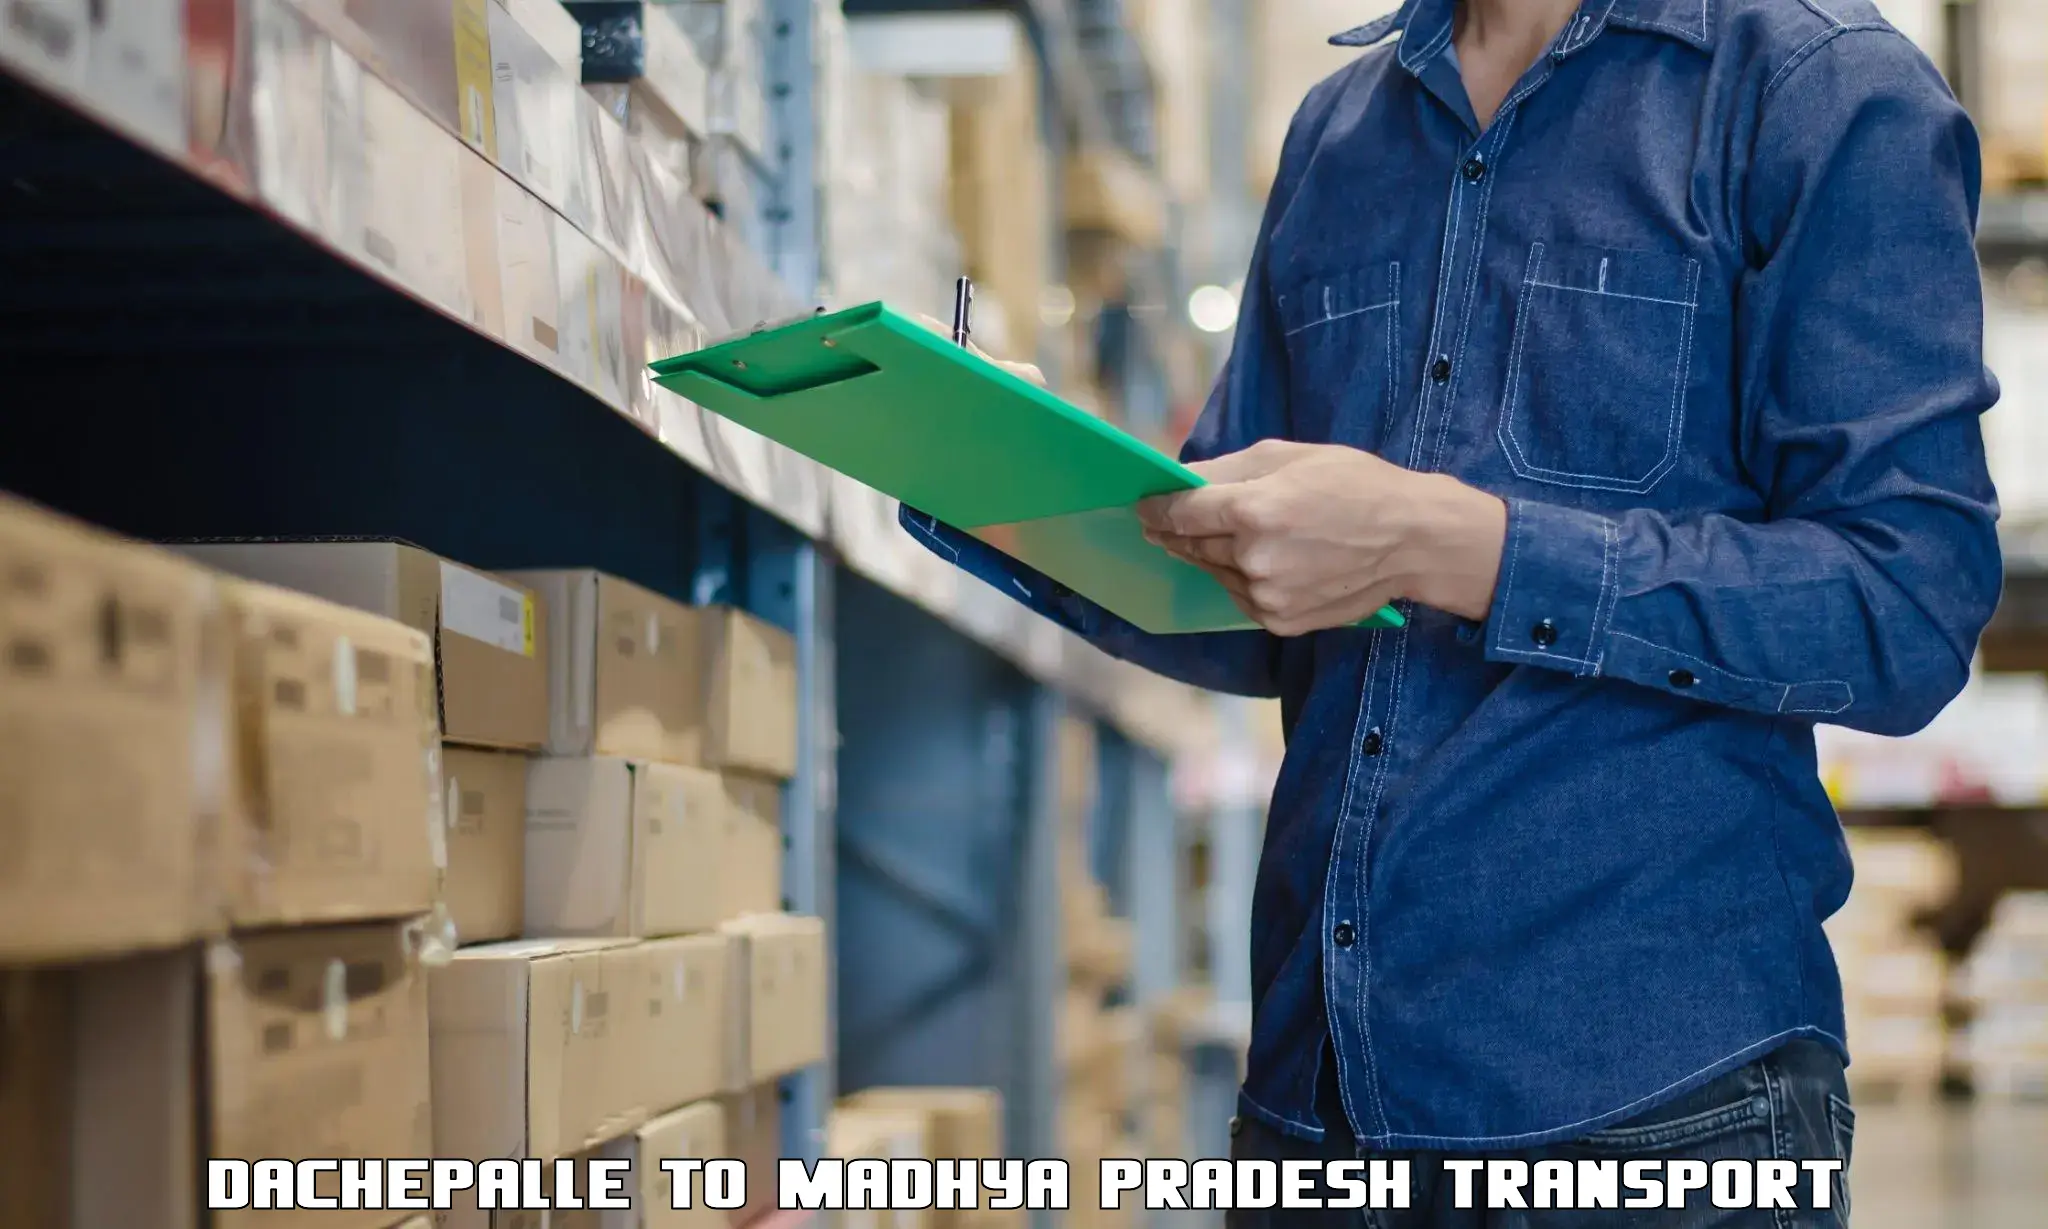 Shipping services Dachepalle to Madhya Pradesh